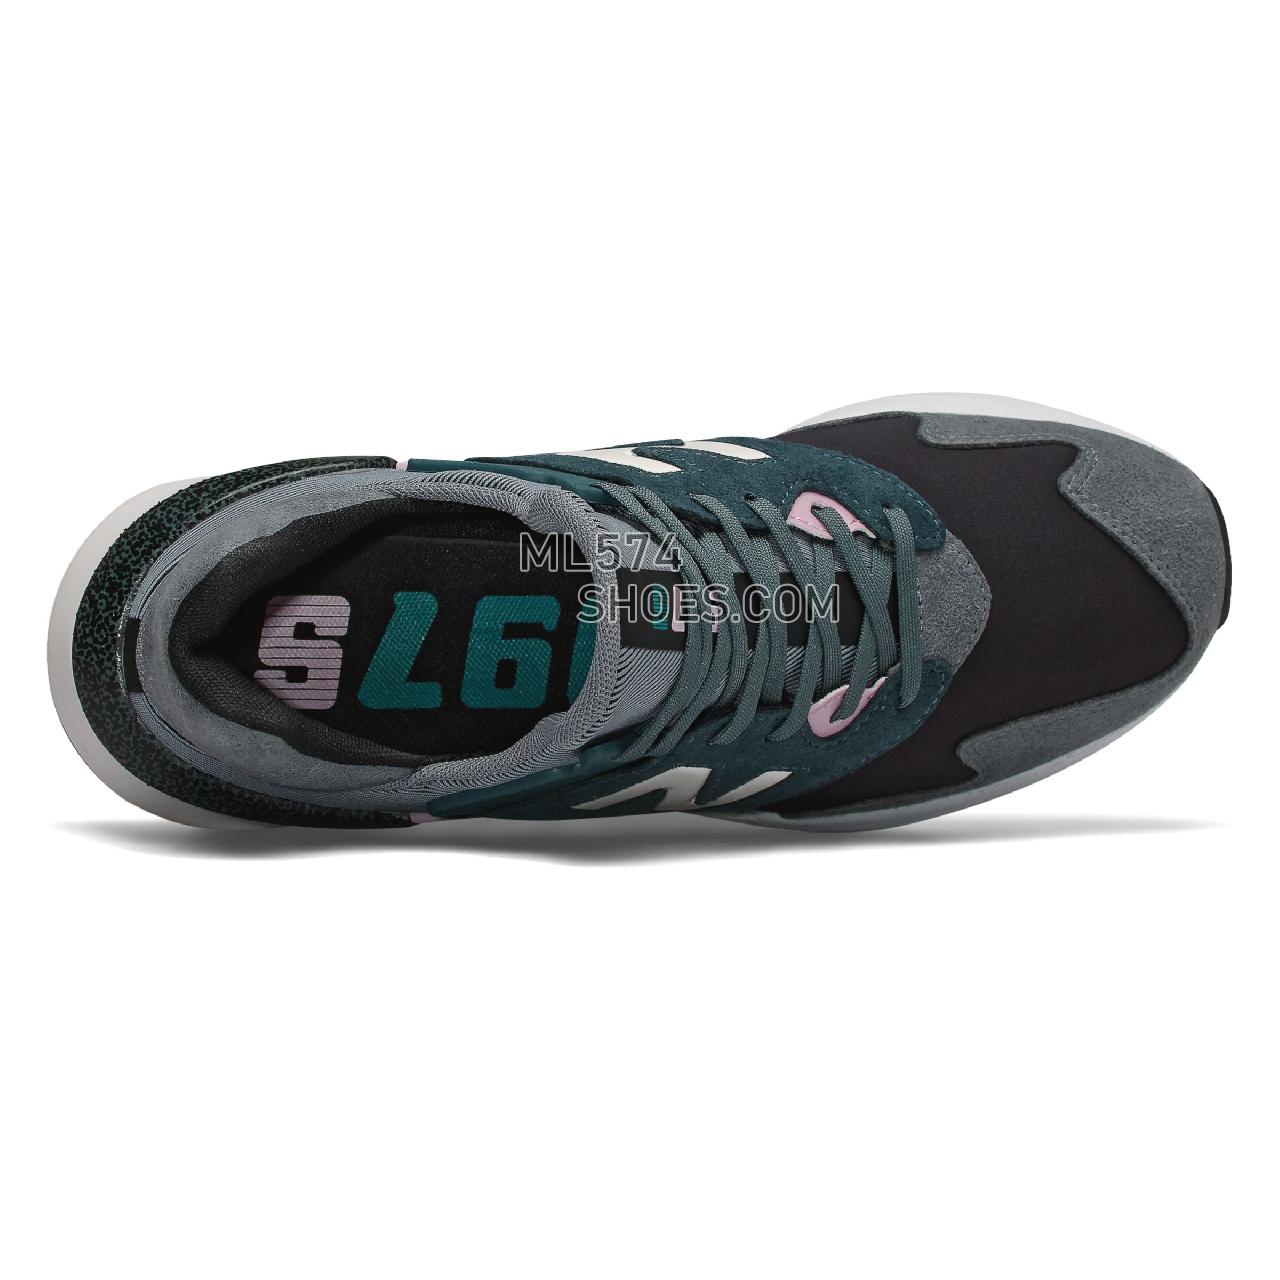 New Balance 997 Sport - Women's Sport Style Sneakers - Black with Gunmetal - WS997JND